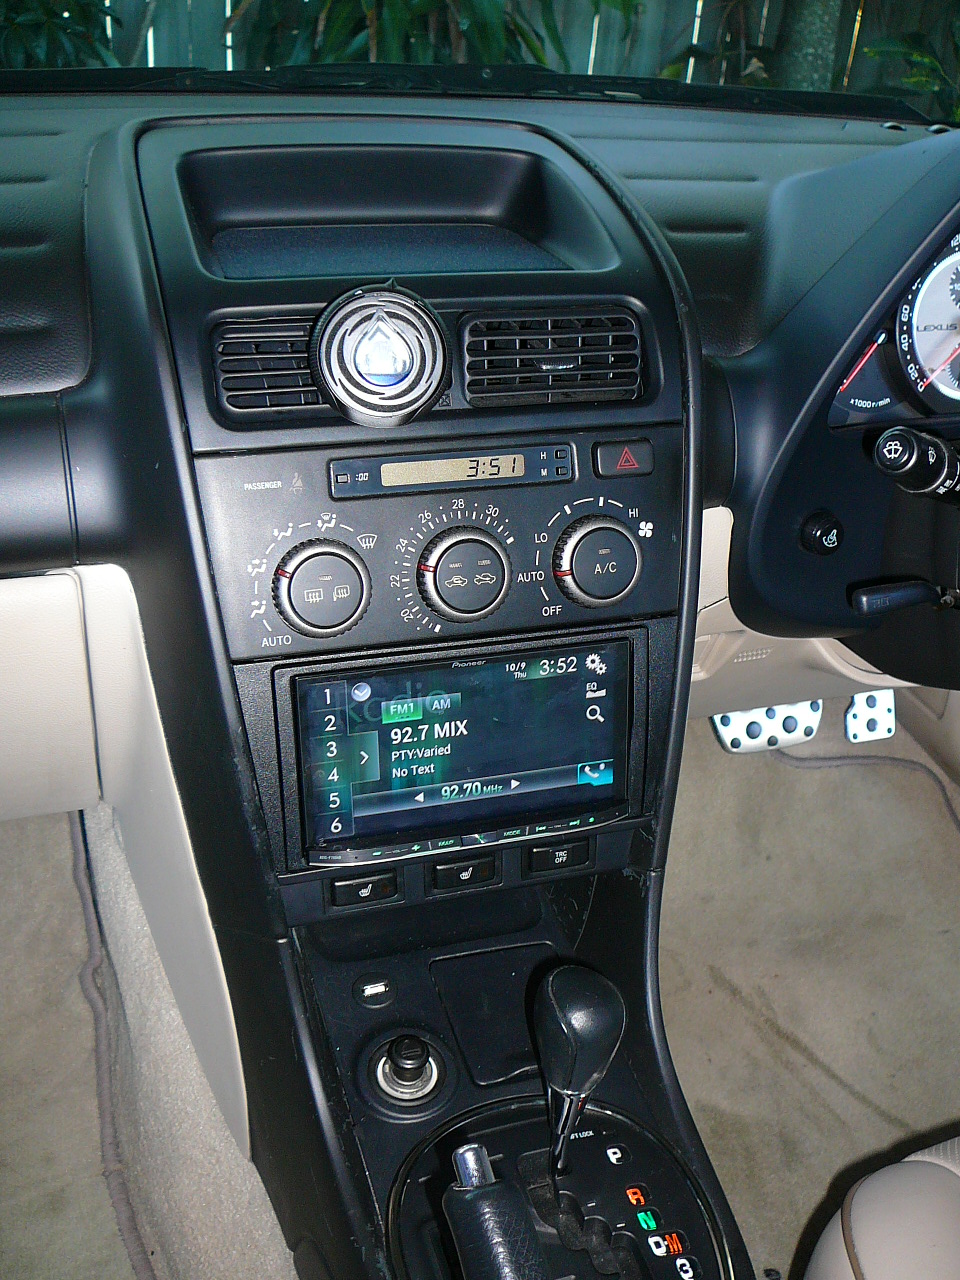 Lexus Is200, Pioneer Avic-F70DAB & Reverse Camera System